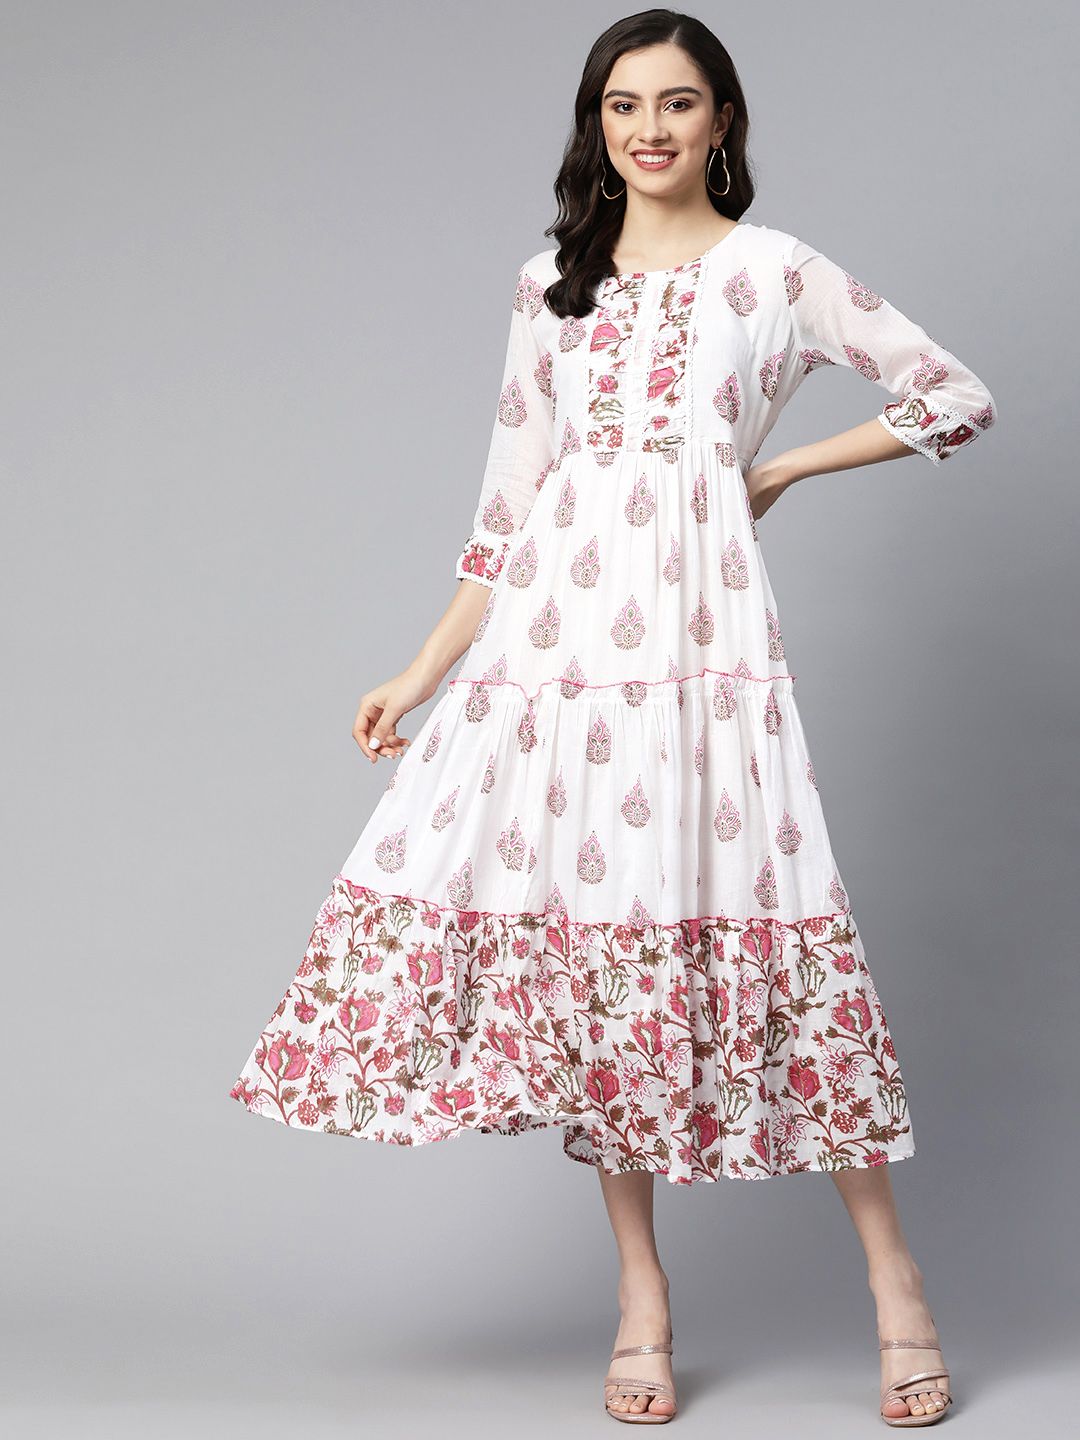 Readiprint Fashions White Ethnic Motifs Maxi Dress Price in India